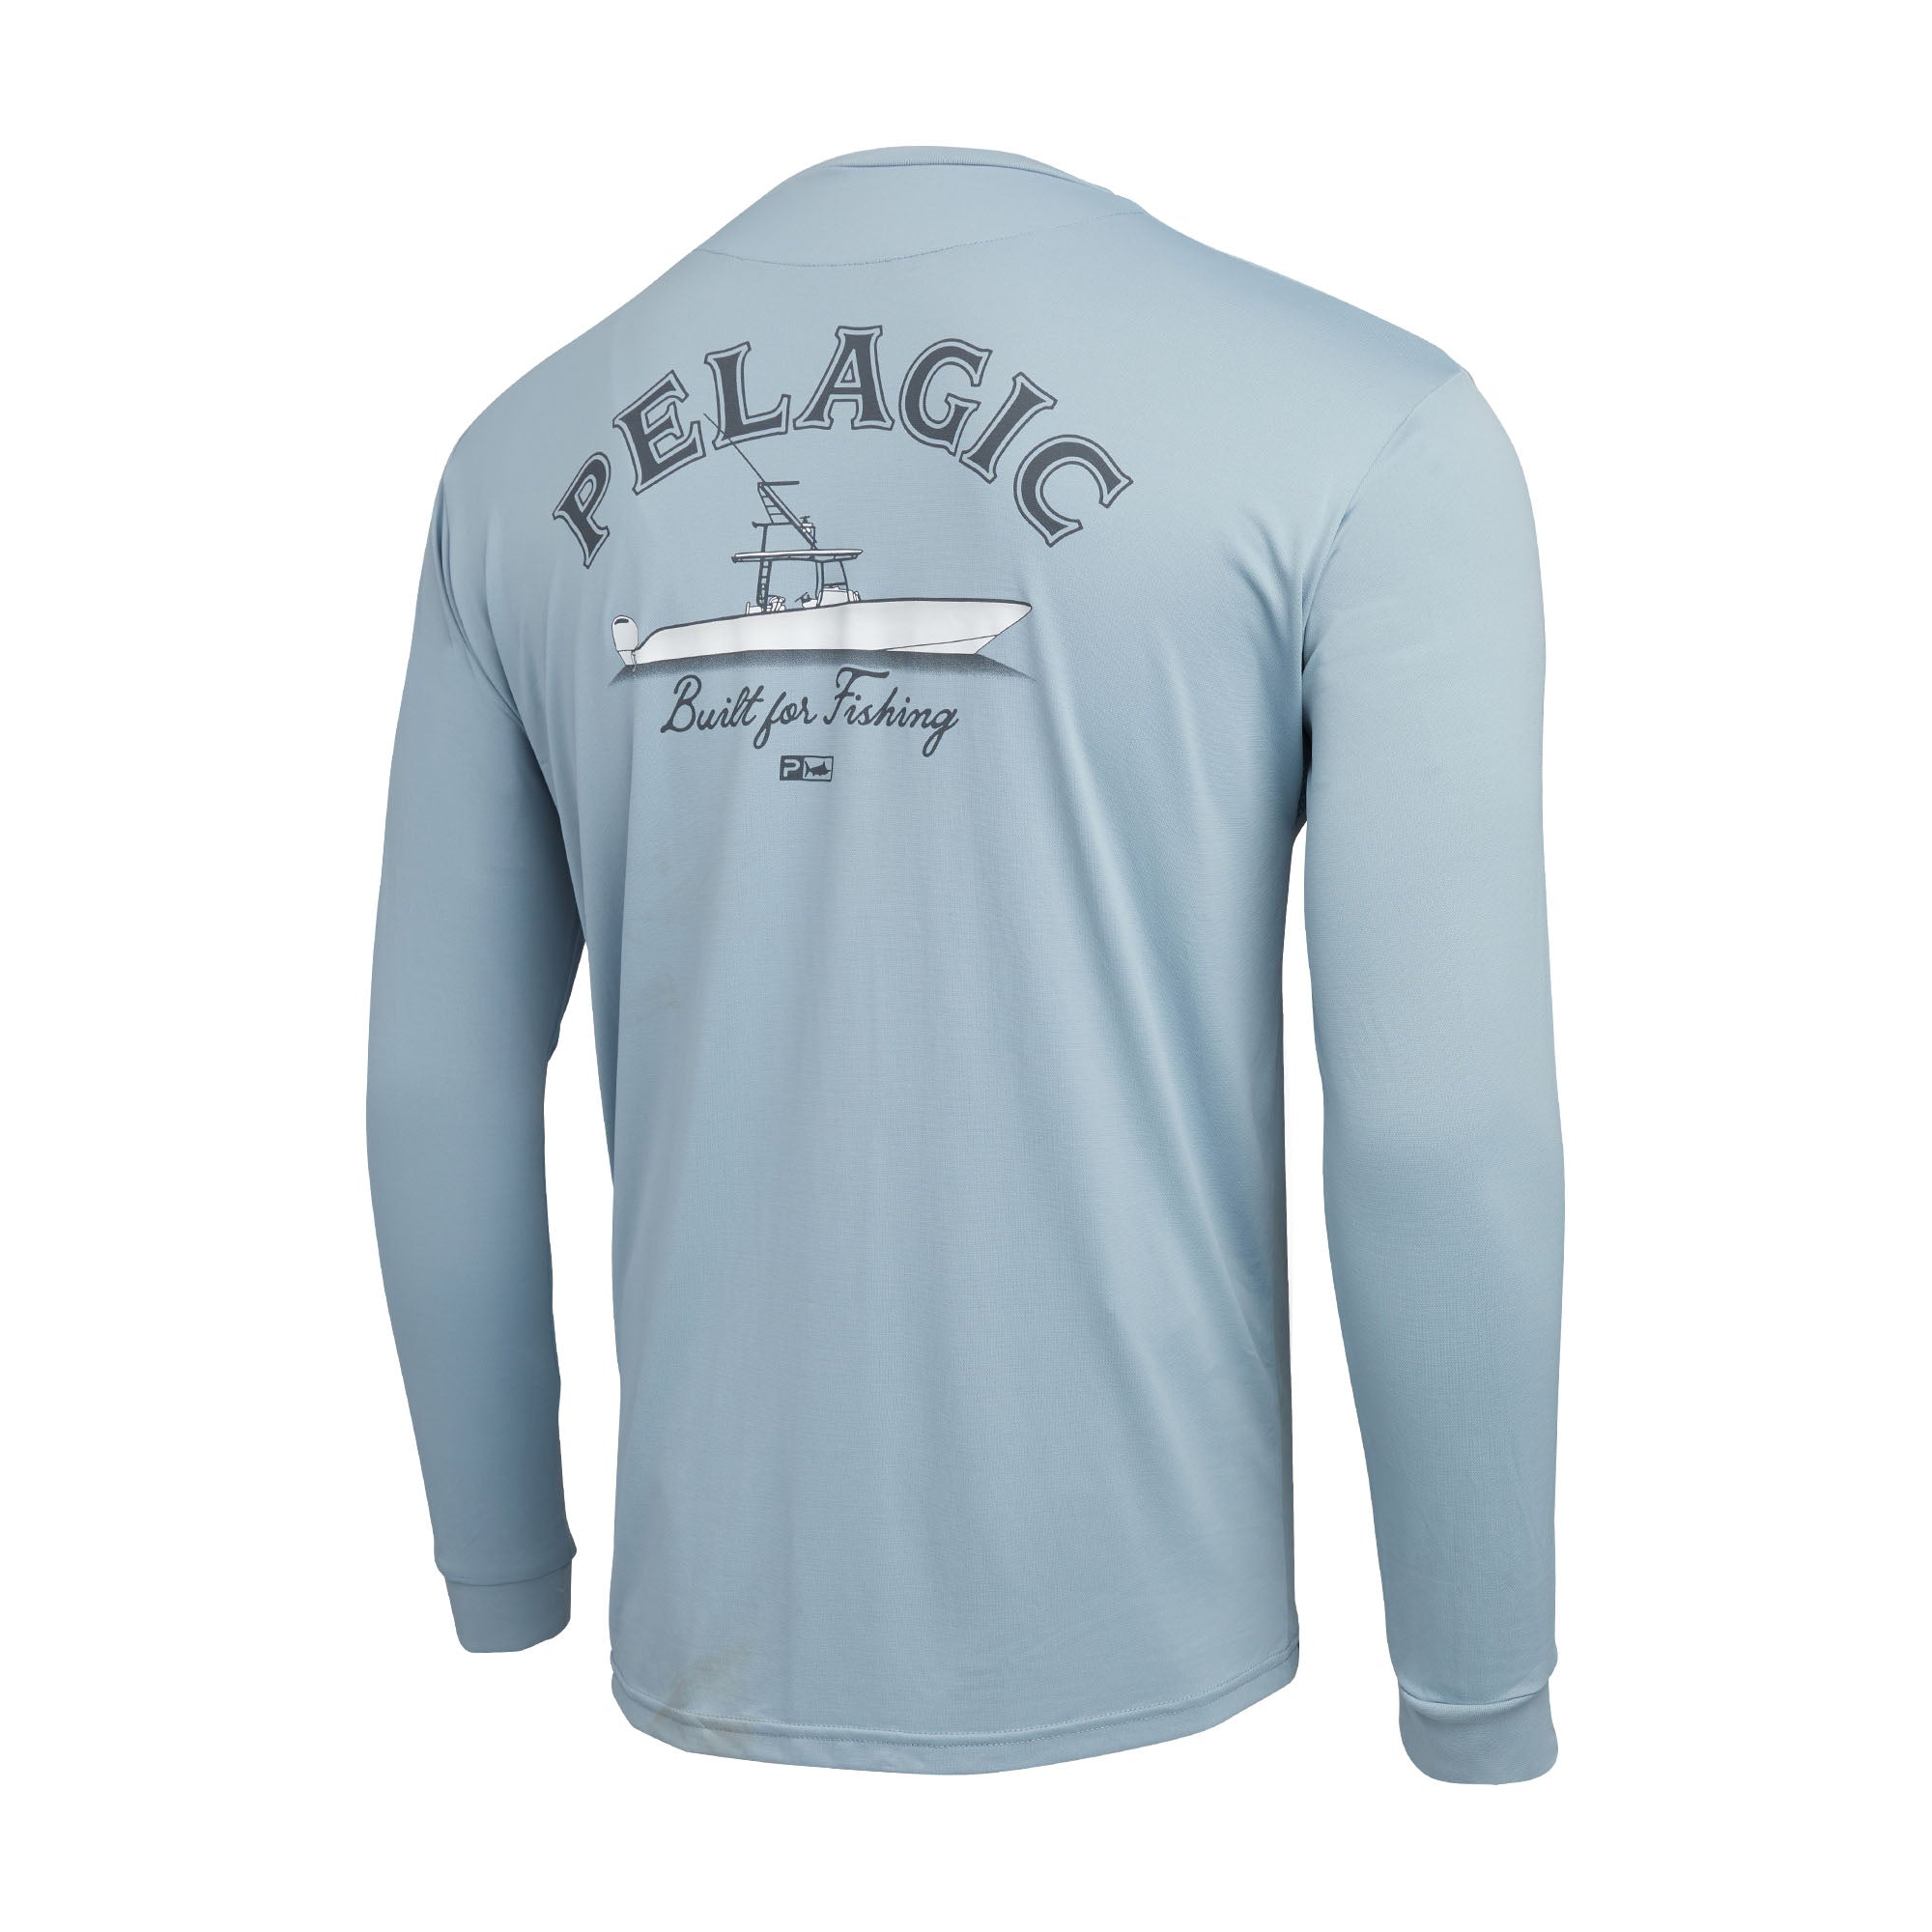 Pelagic Aquatek Game Fish Shirt, white, Fly Fishing